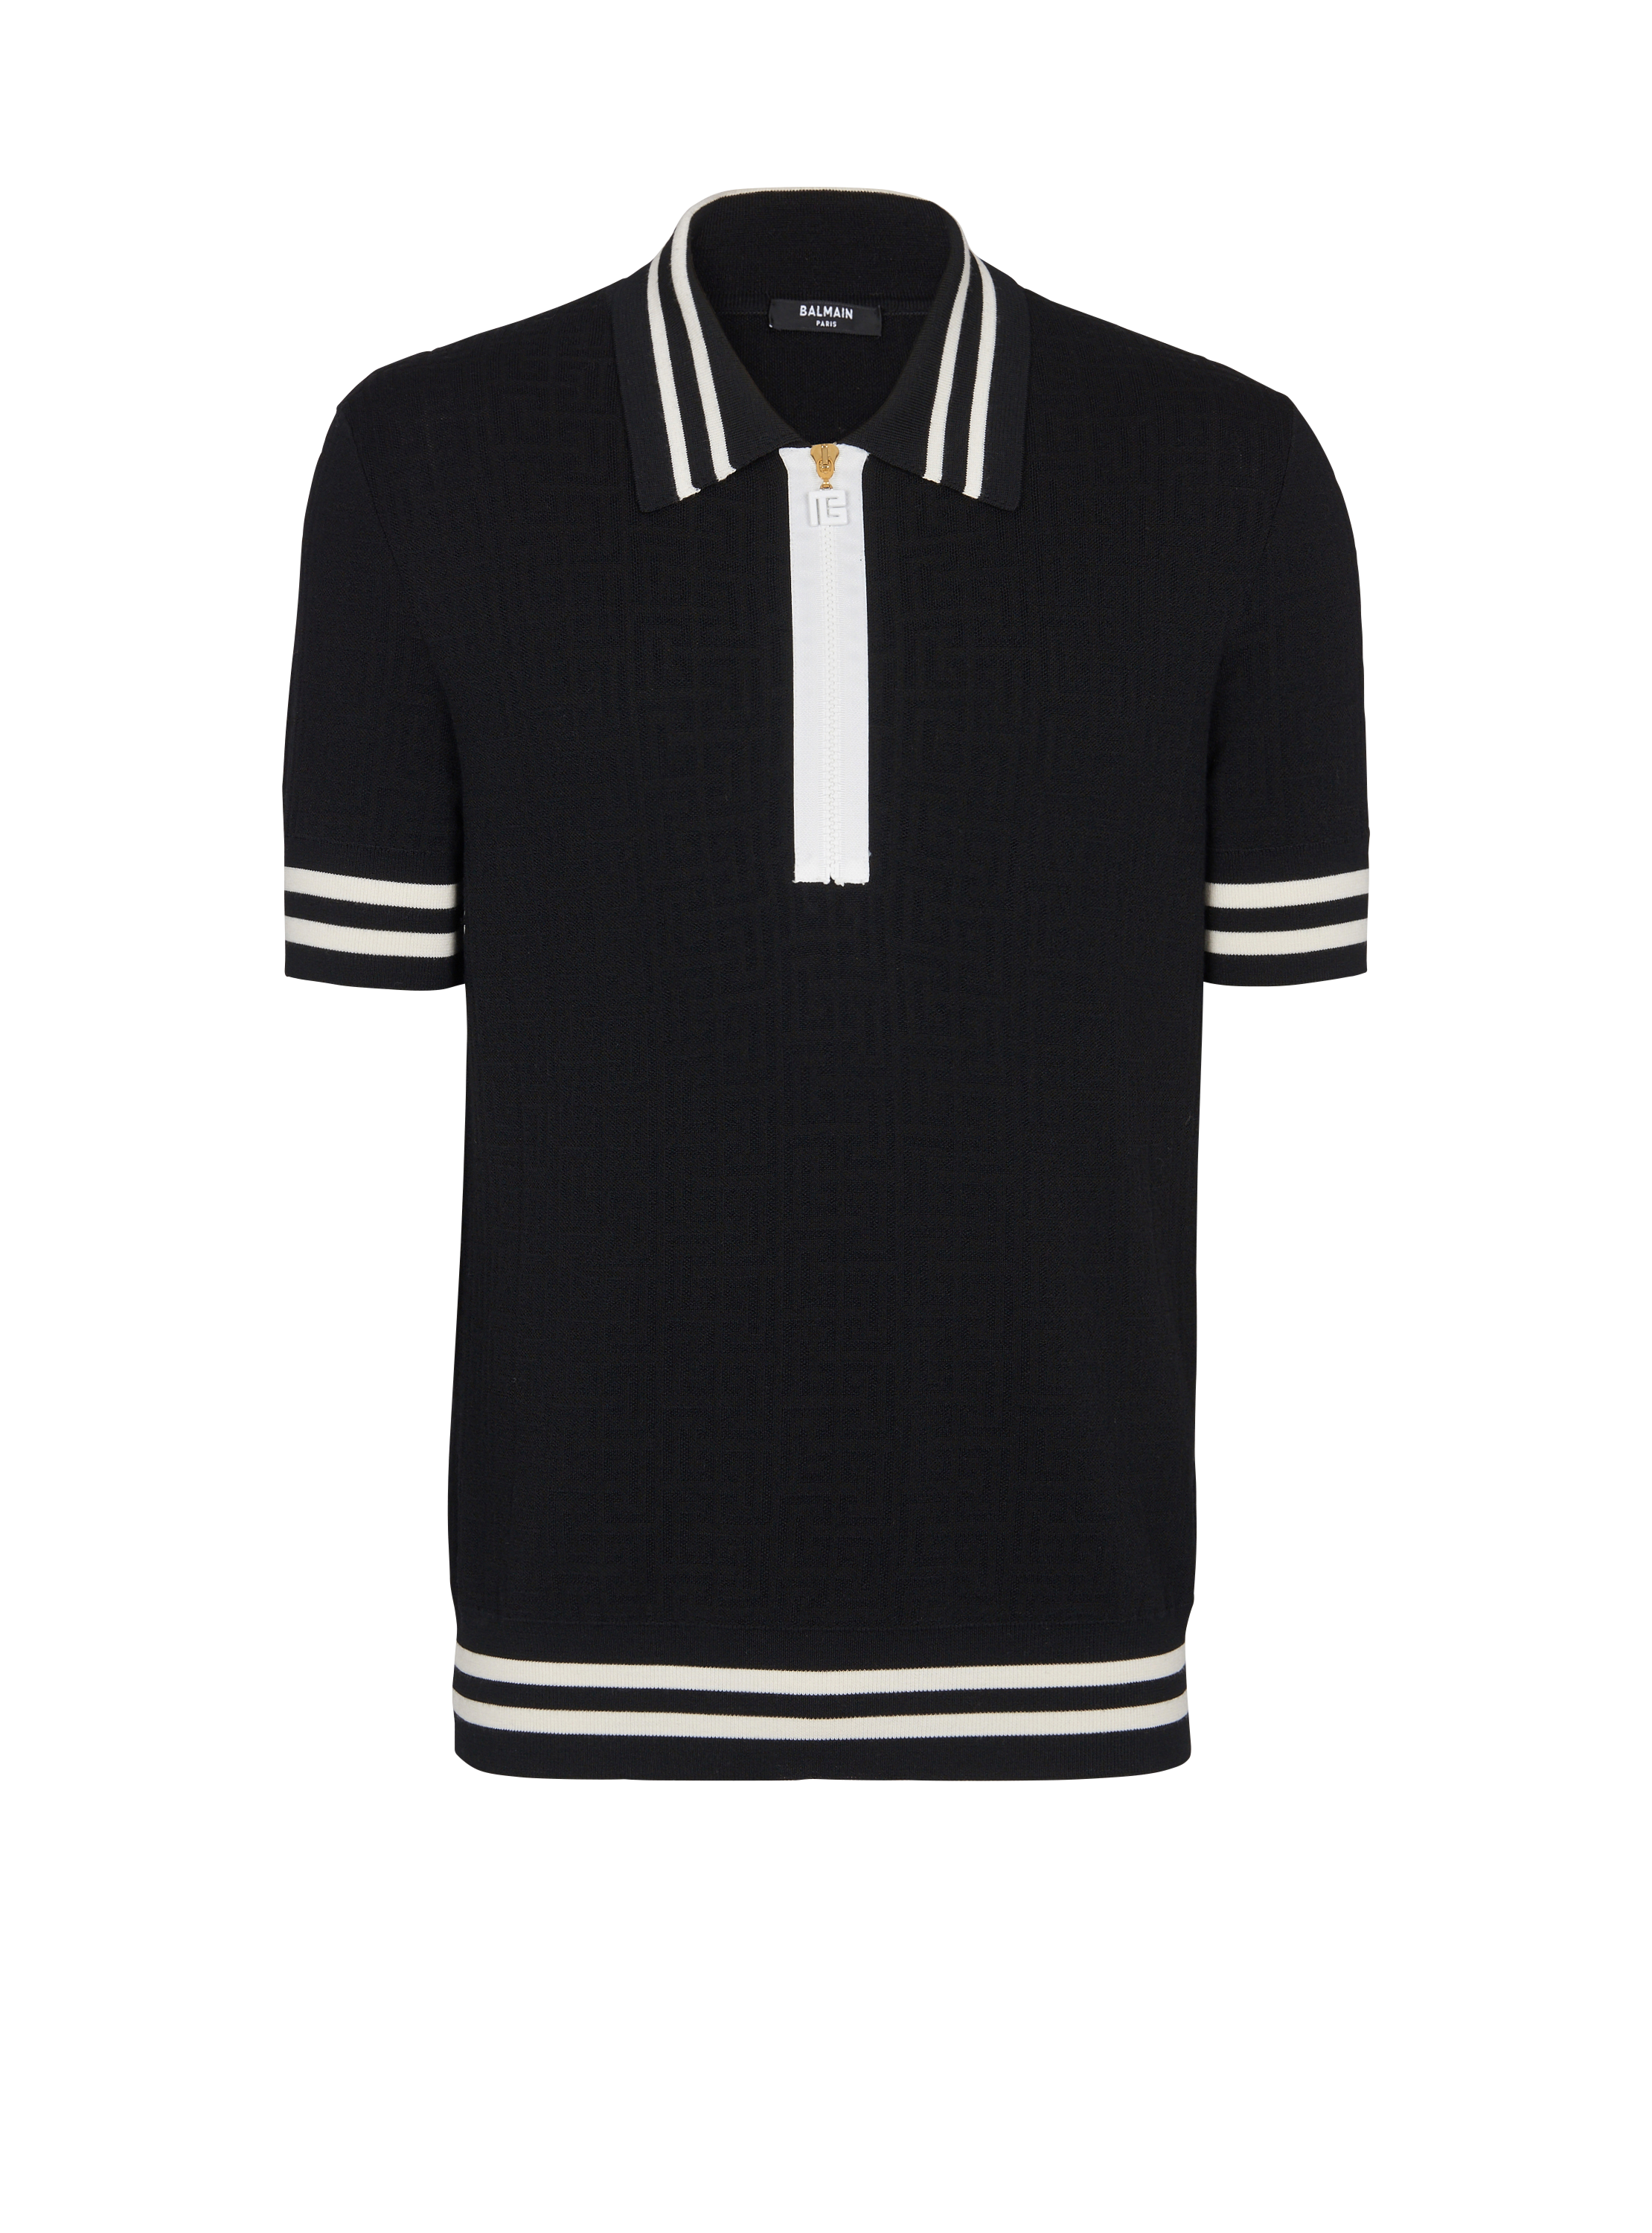 Poloshirt aus jacquard mit monogramm, schwarz, hi-res